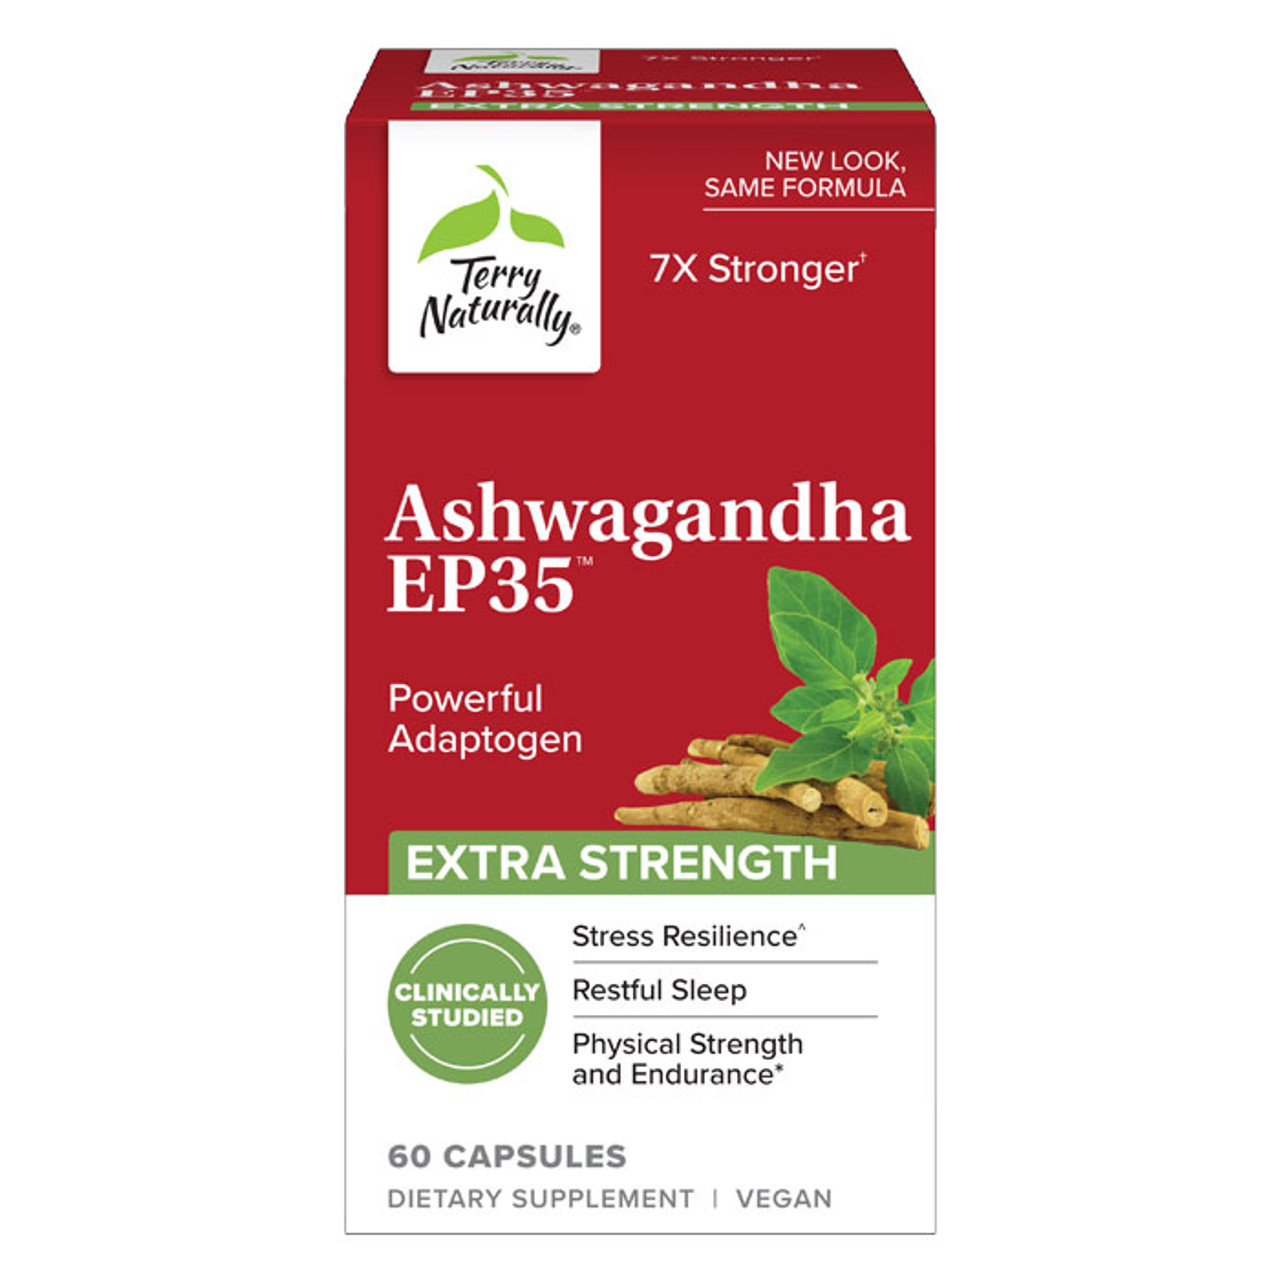 Terry Naturally Ashwagandha EP35 Extra Strength at Homestead Market